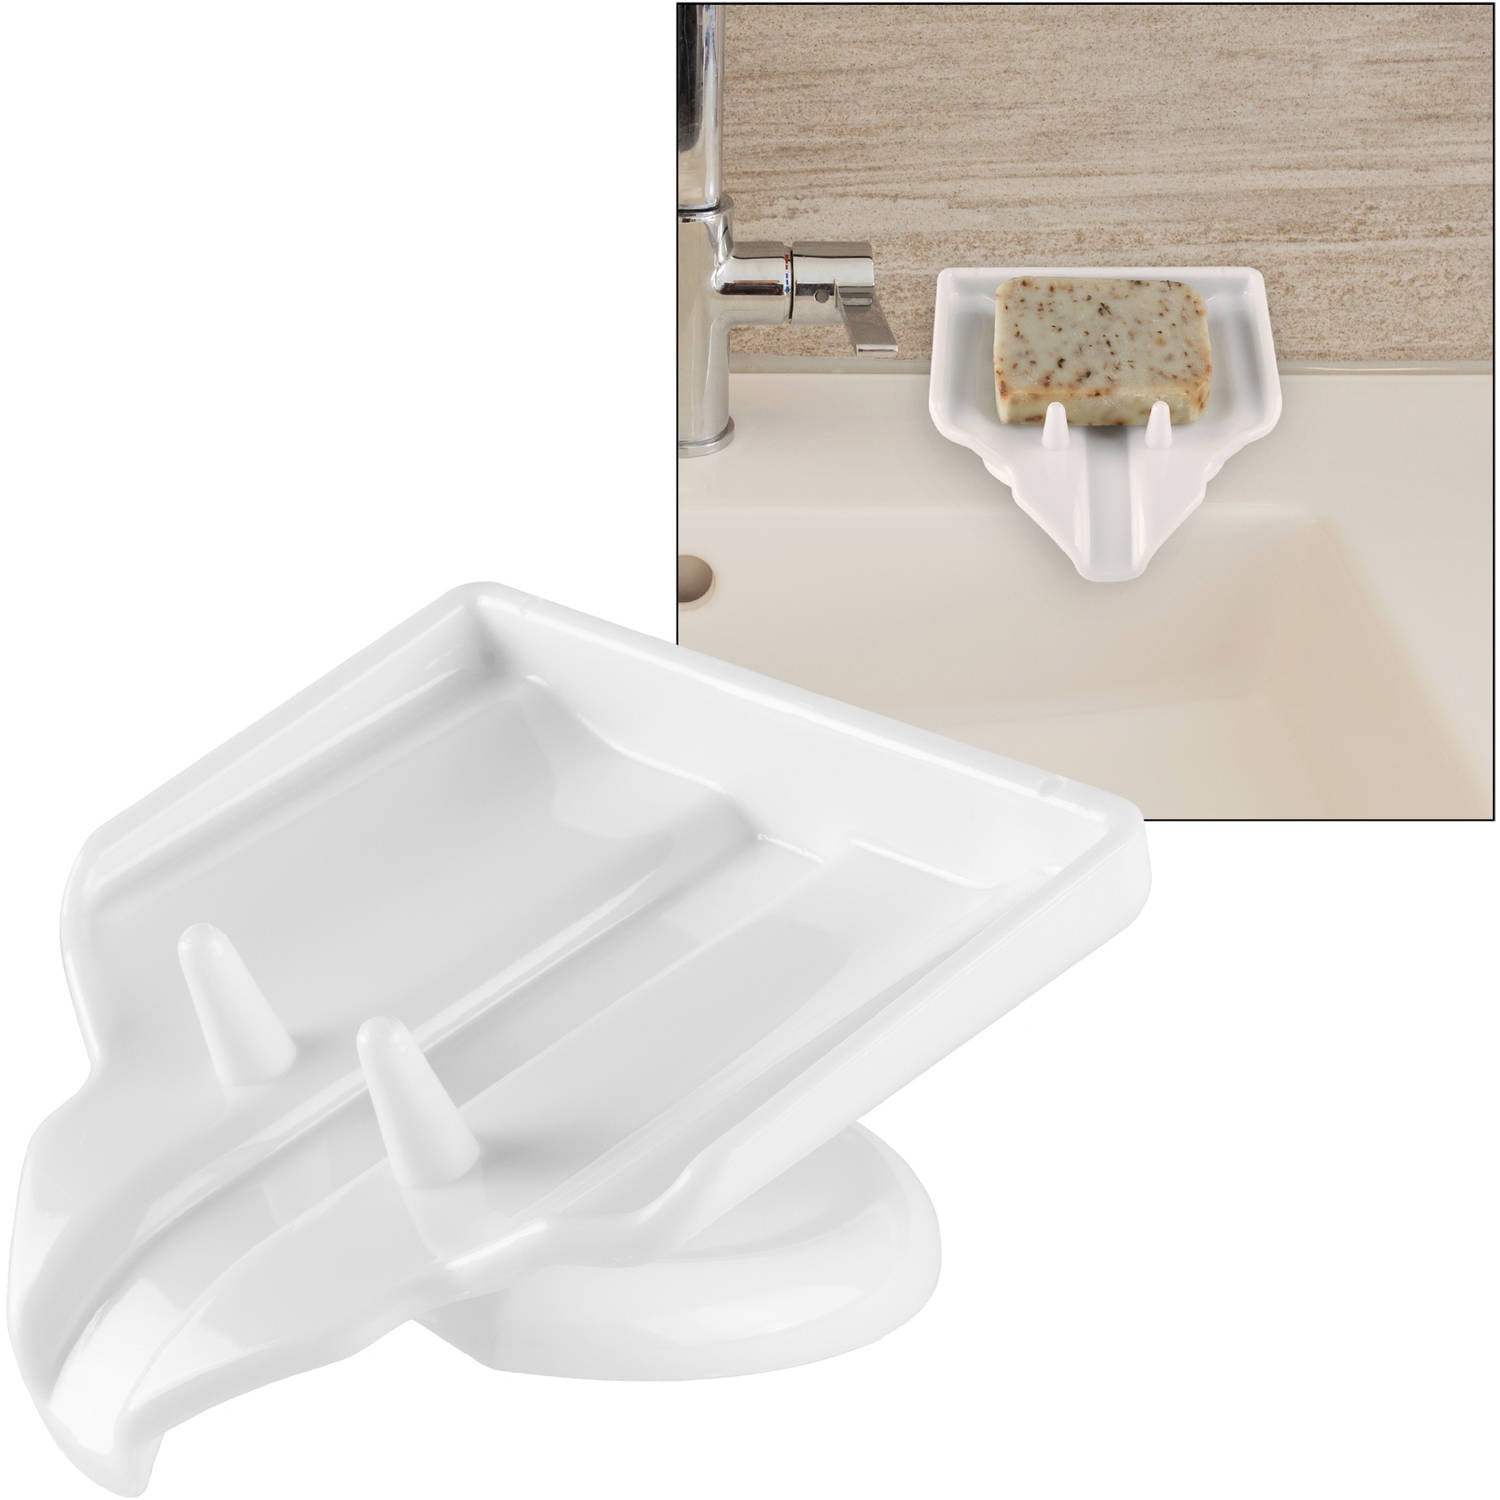 Flexible Waterfall Soap Holder Tray Drain Bathroom Shower Dish Storage L 